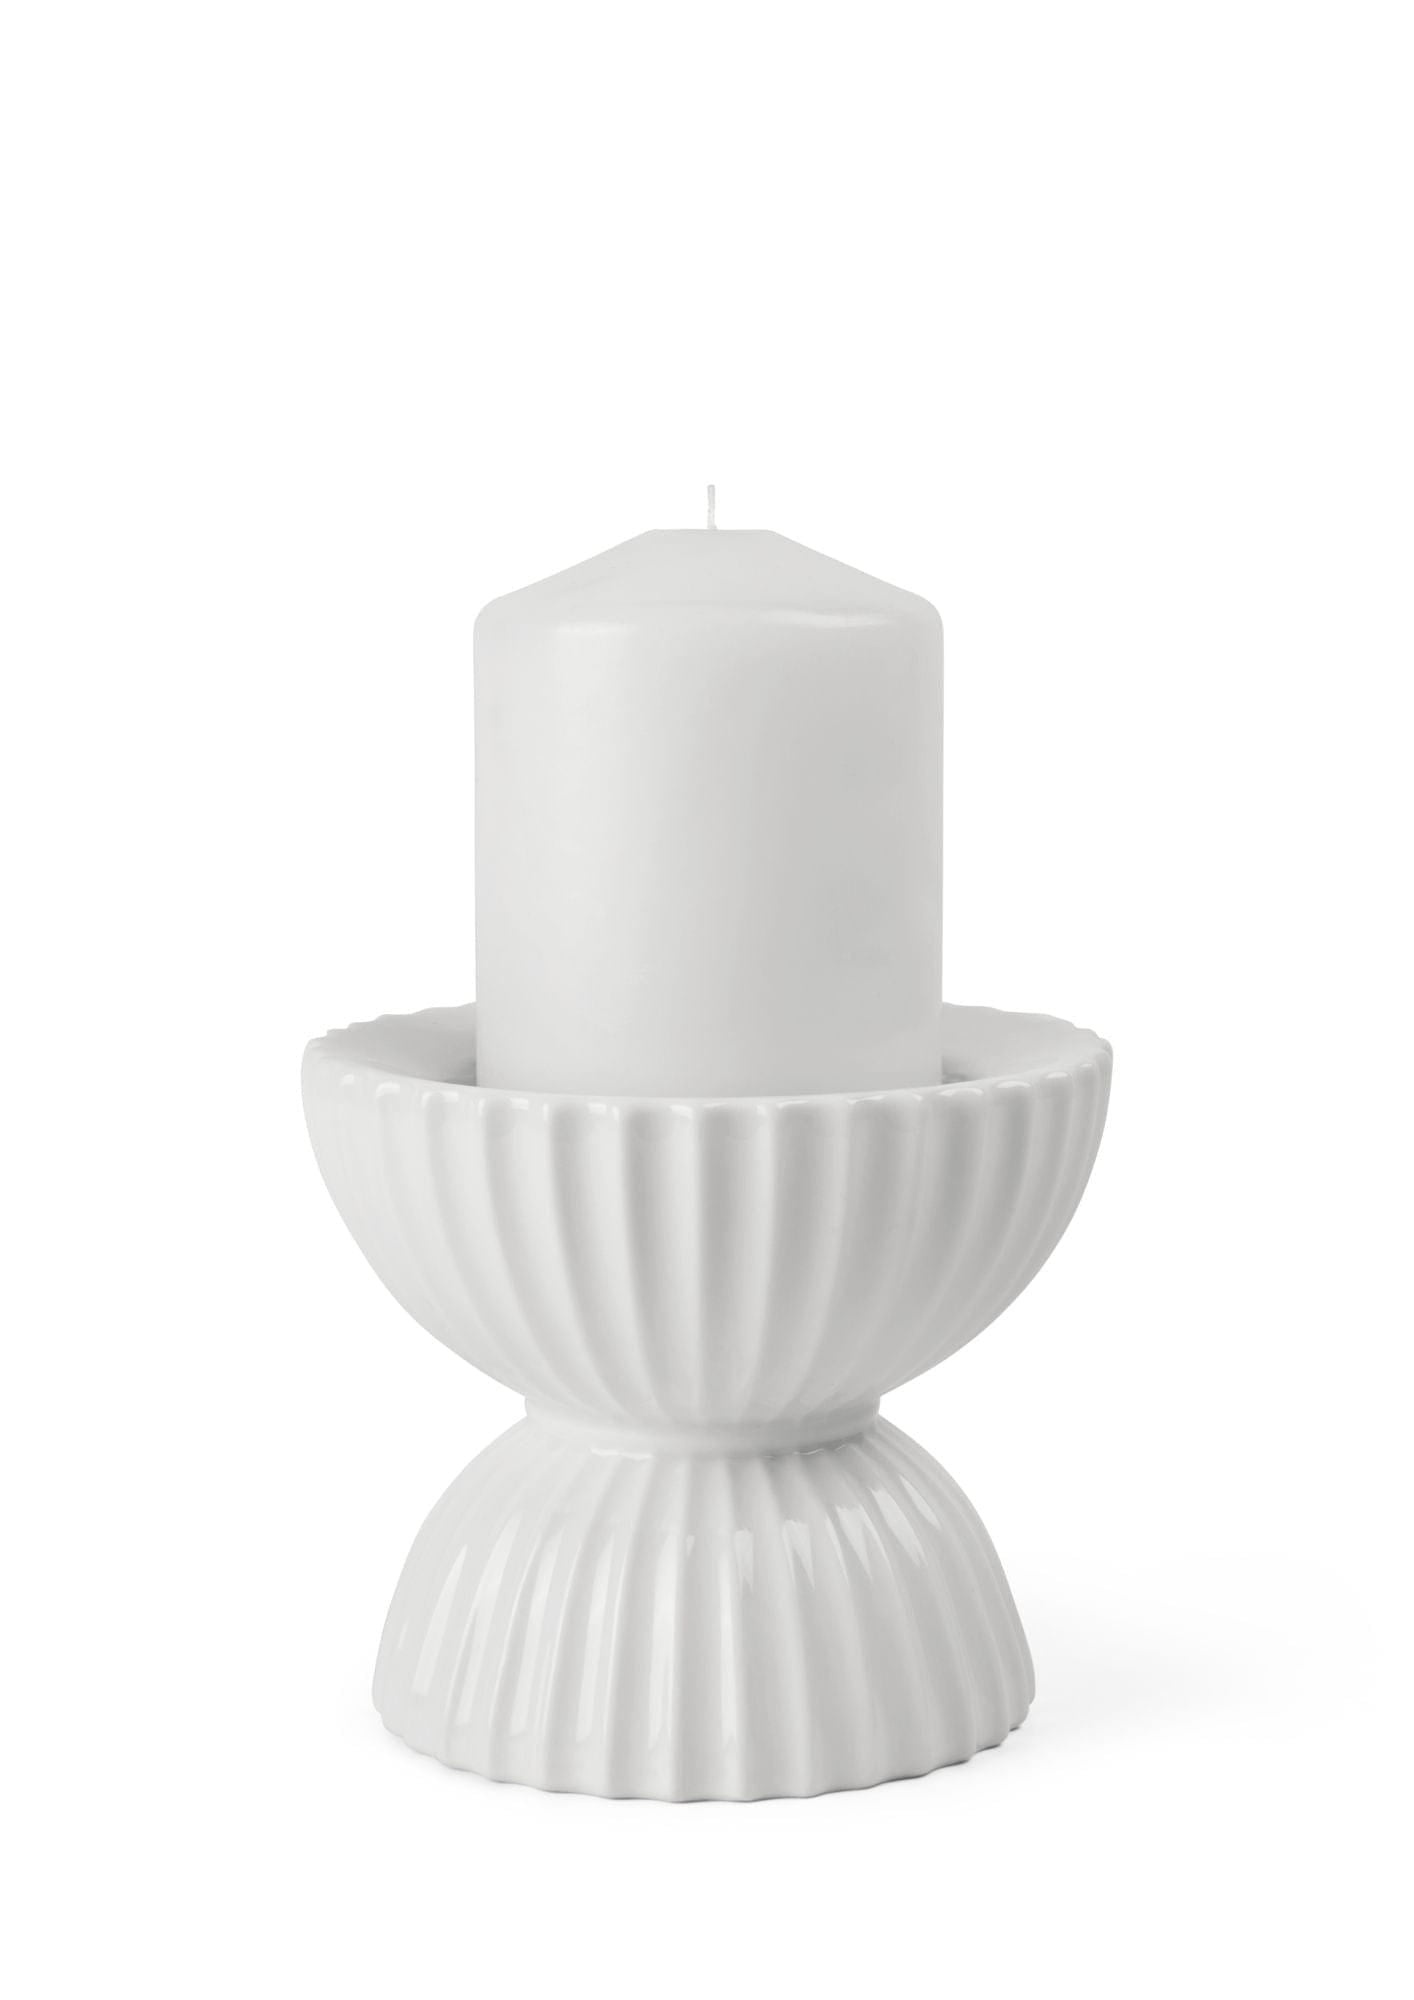 Lyngby Porcelæn Lyngby Tura Block Candle Holder ø11,5 Cm, White